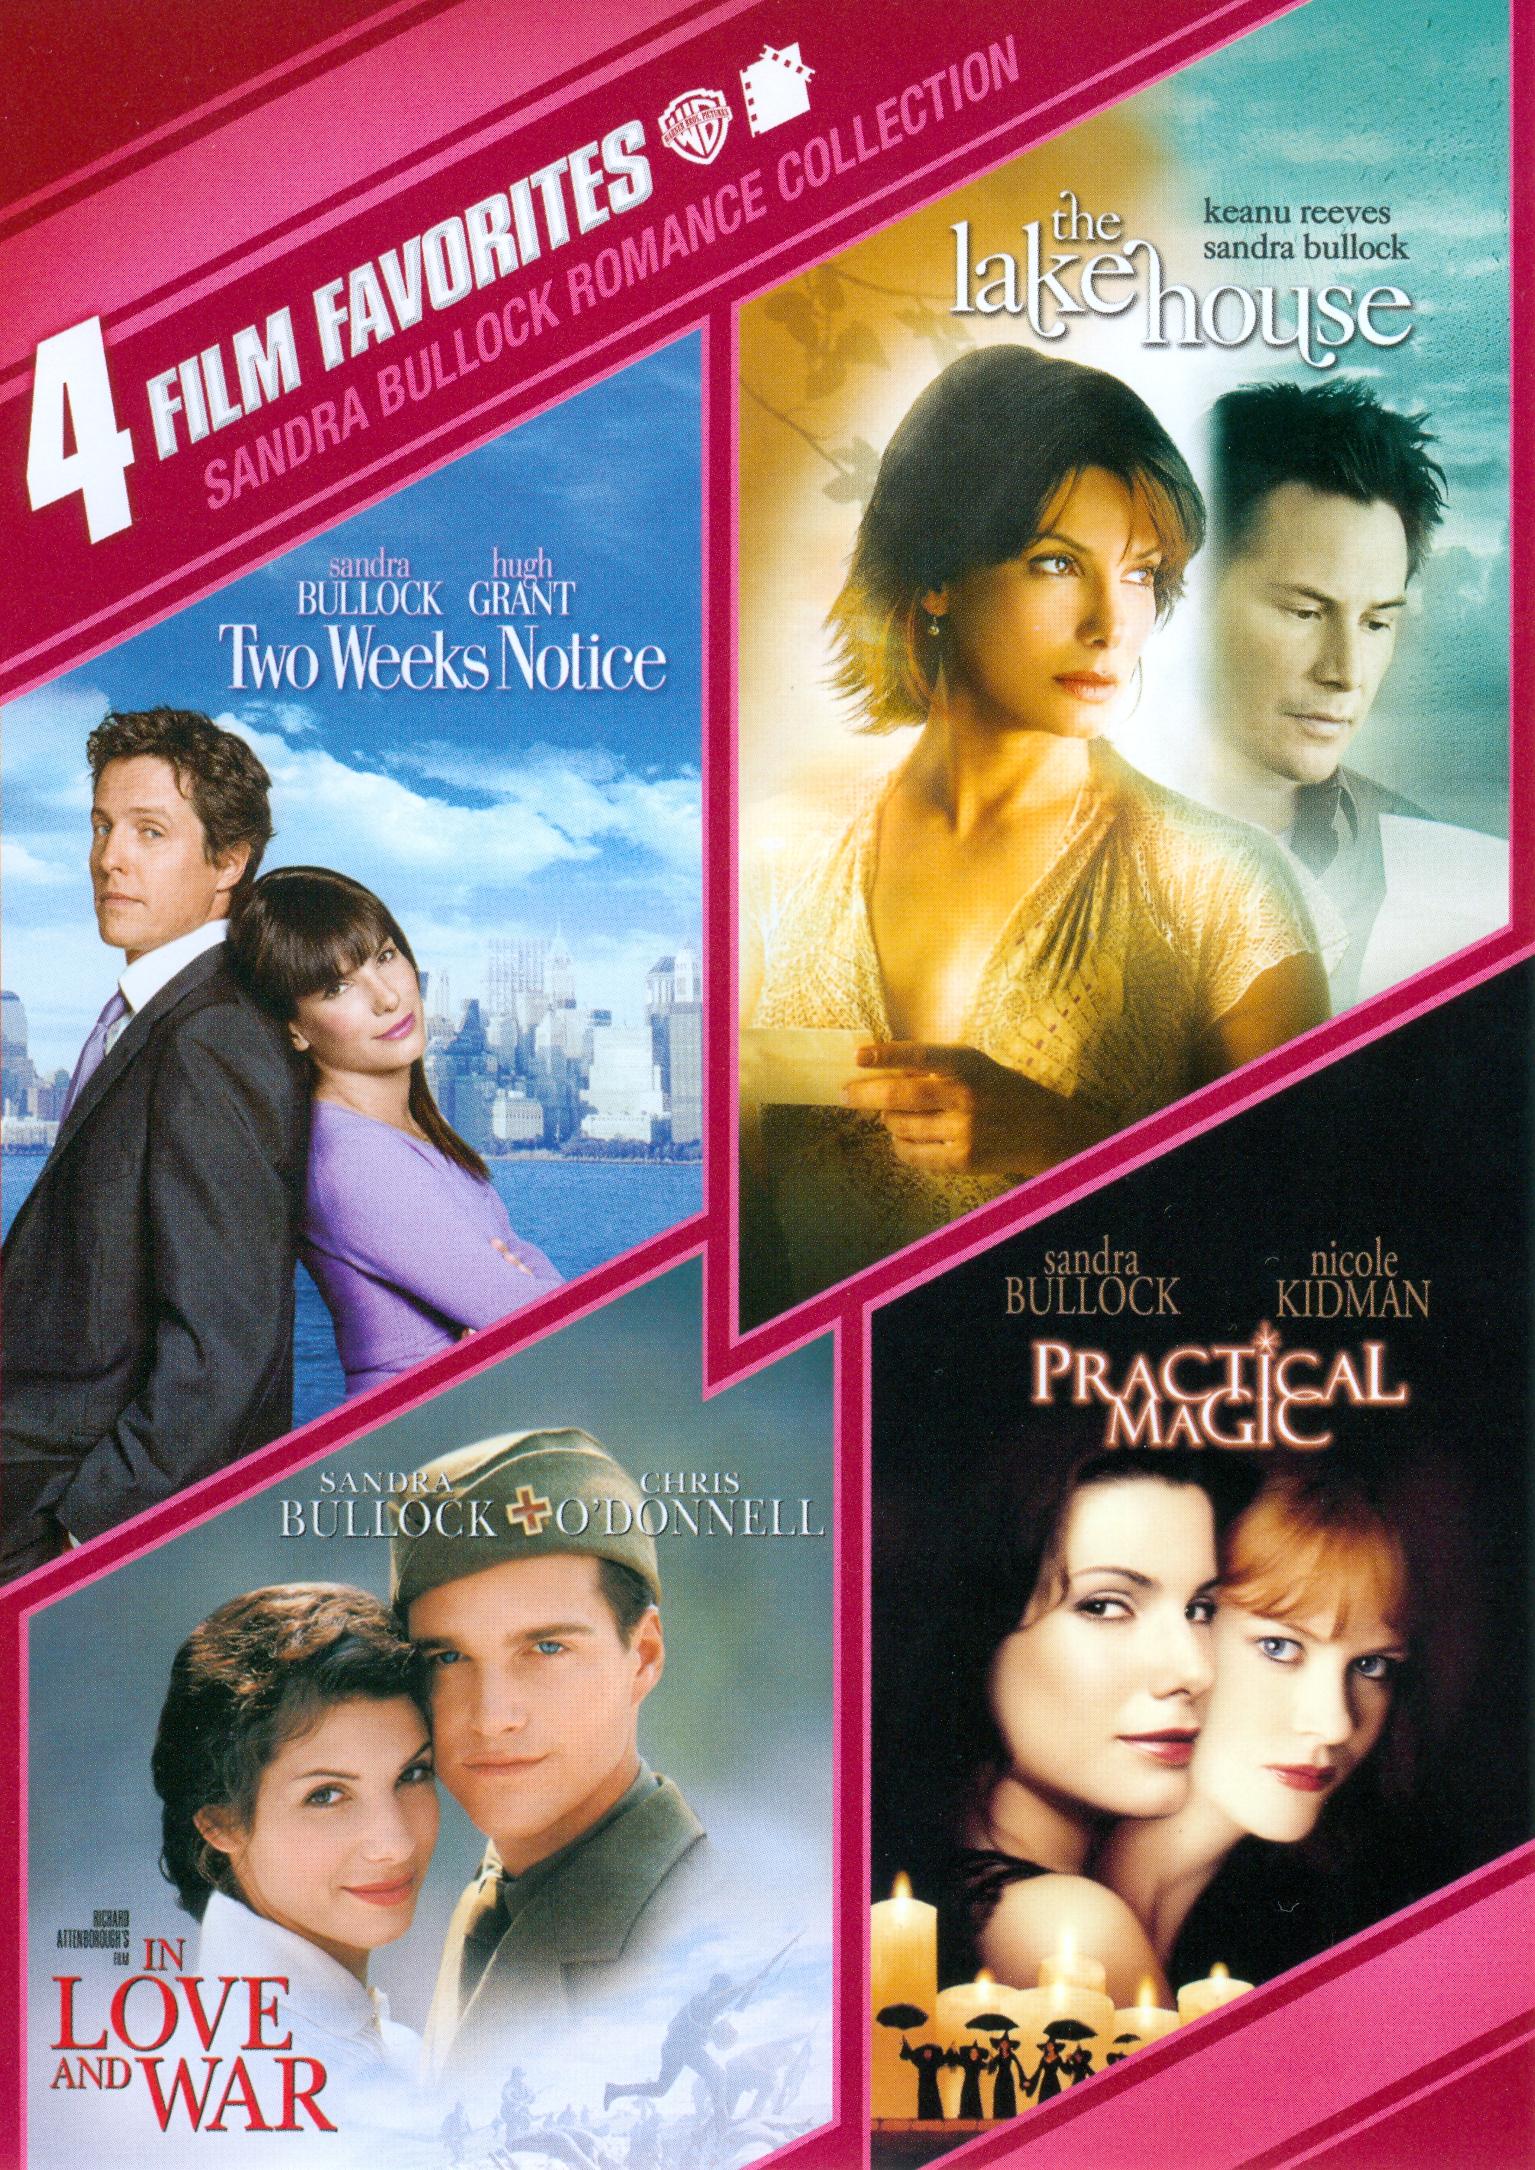 4 Film Favorites: Sandra Bullock Romance Collection (DVD)